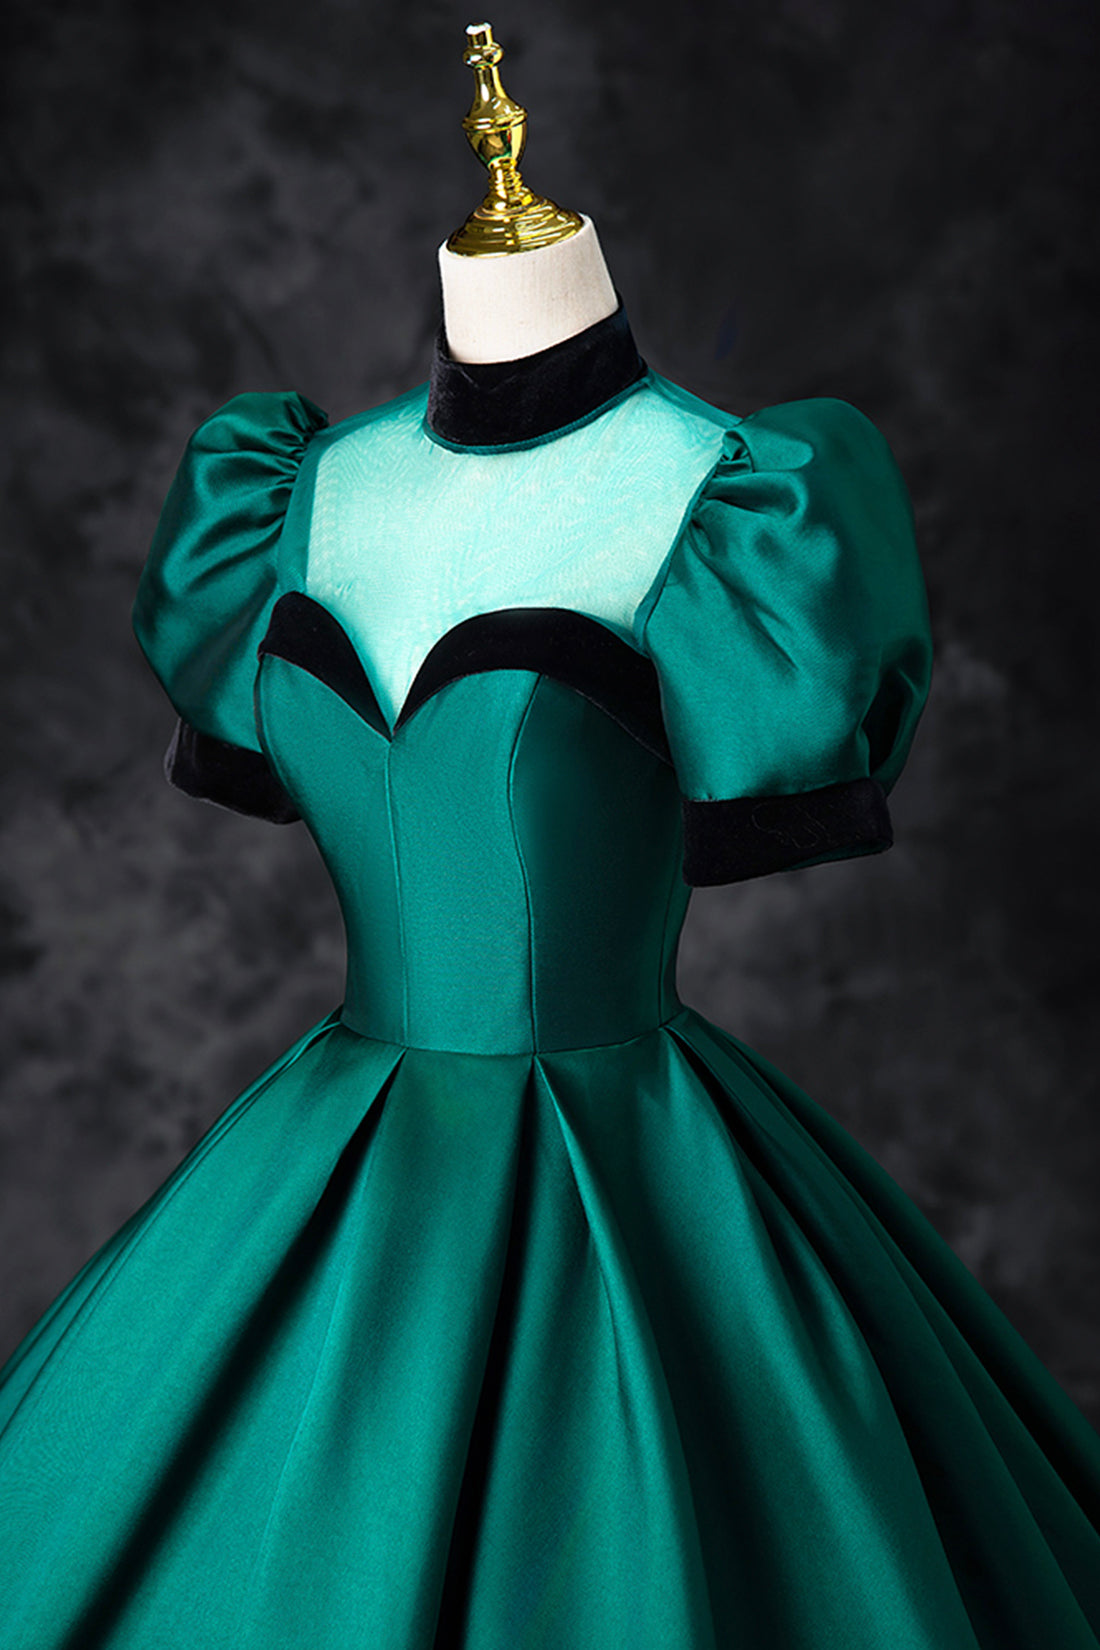 Green Satin Long Prom Dress, Elegant A-Line Short Sleeve Formal Evening Dress